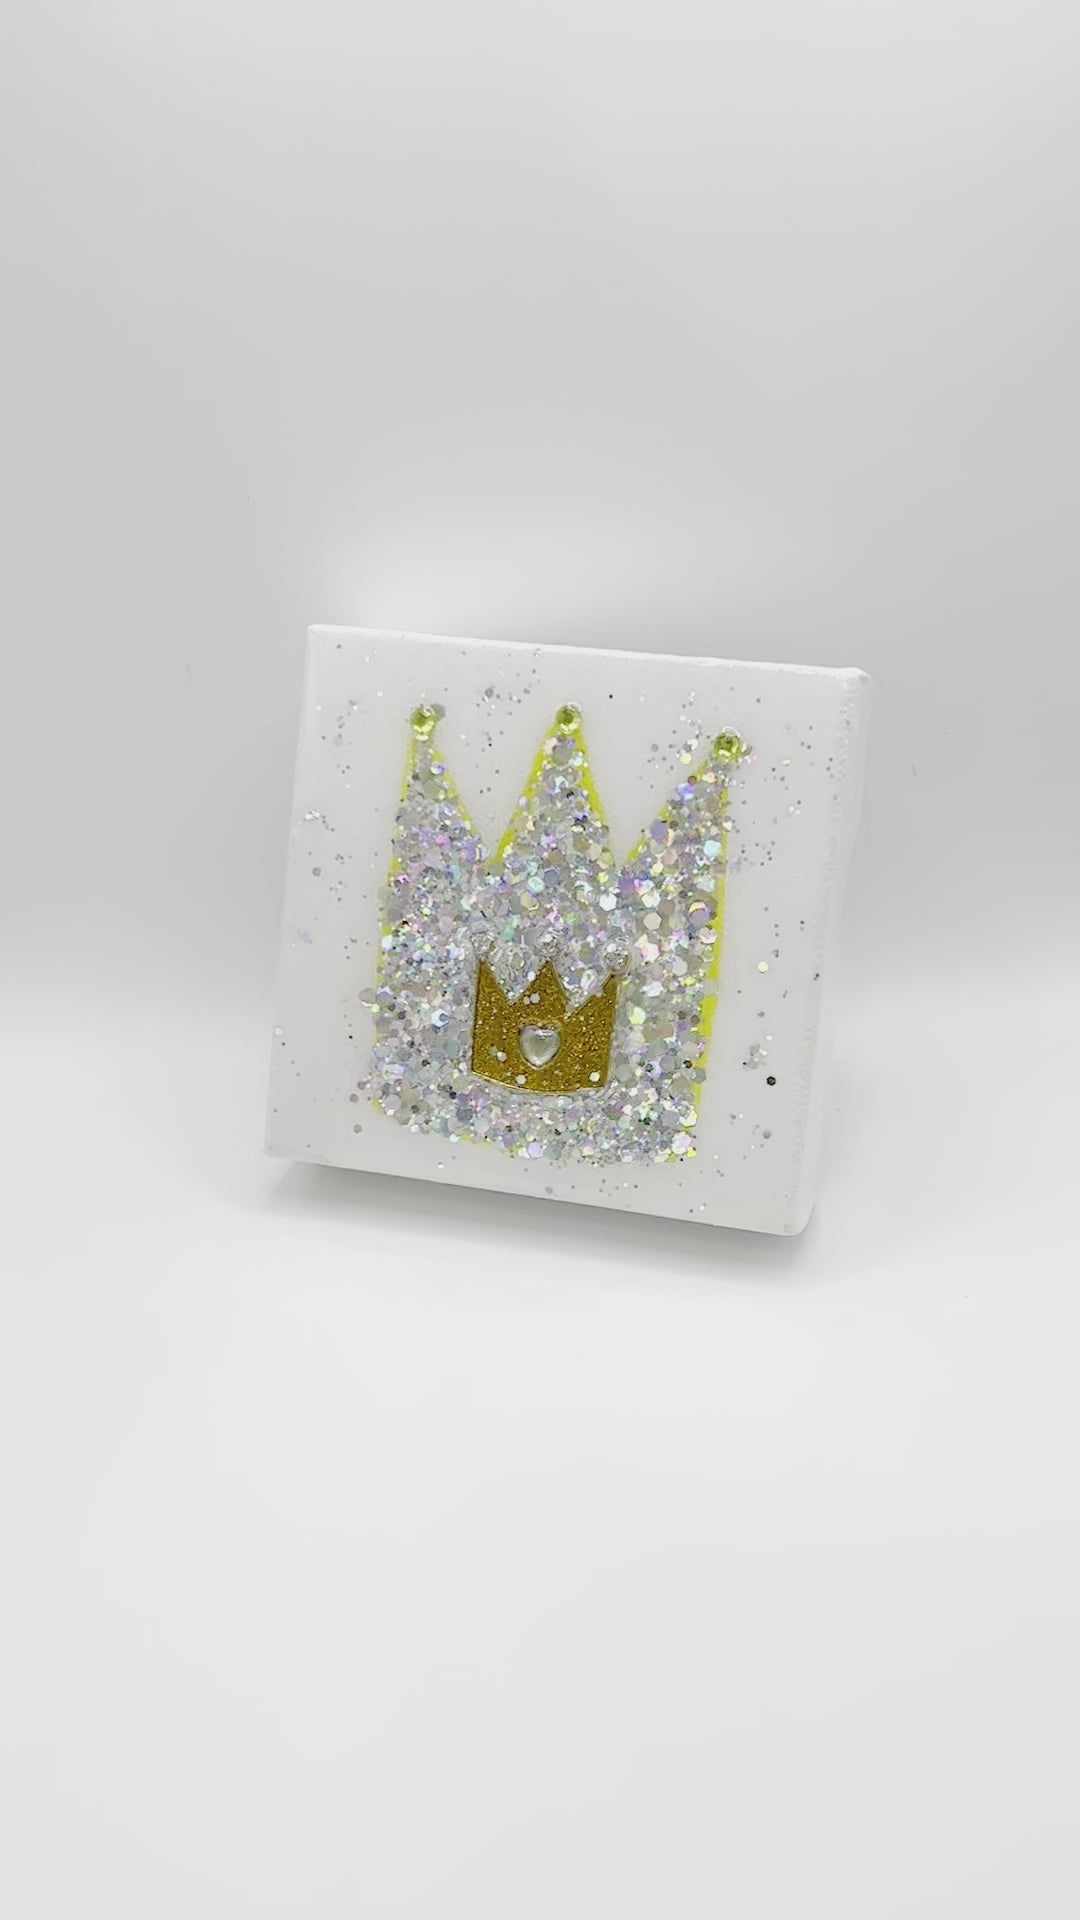 Silver Crown - Pink -Swarovski Crystals